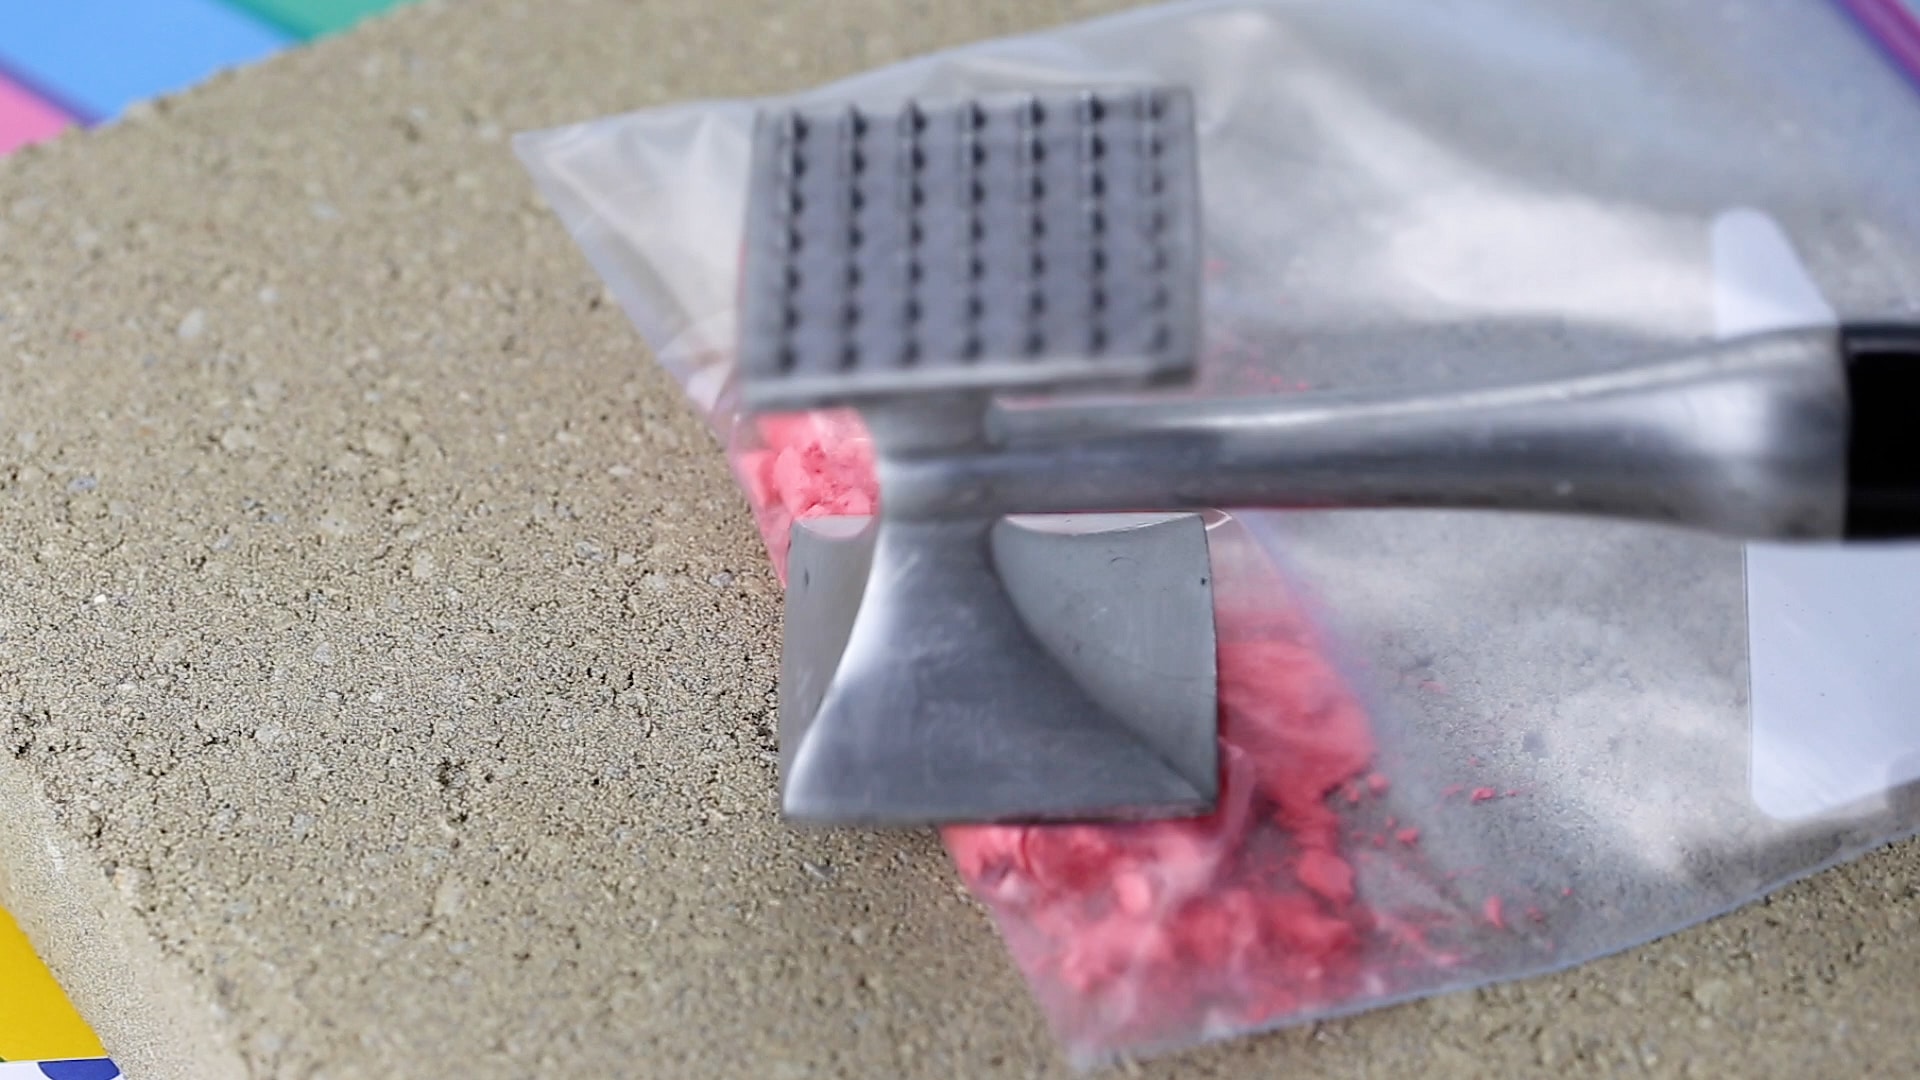 mashing up chalk in bags